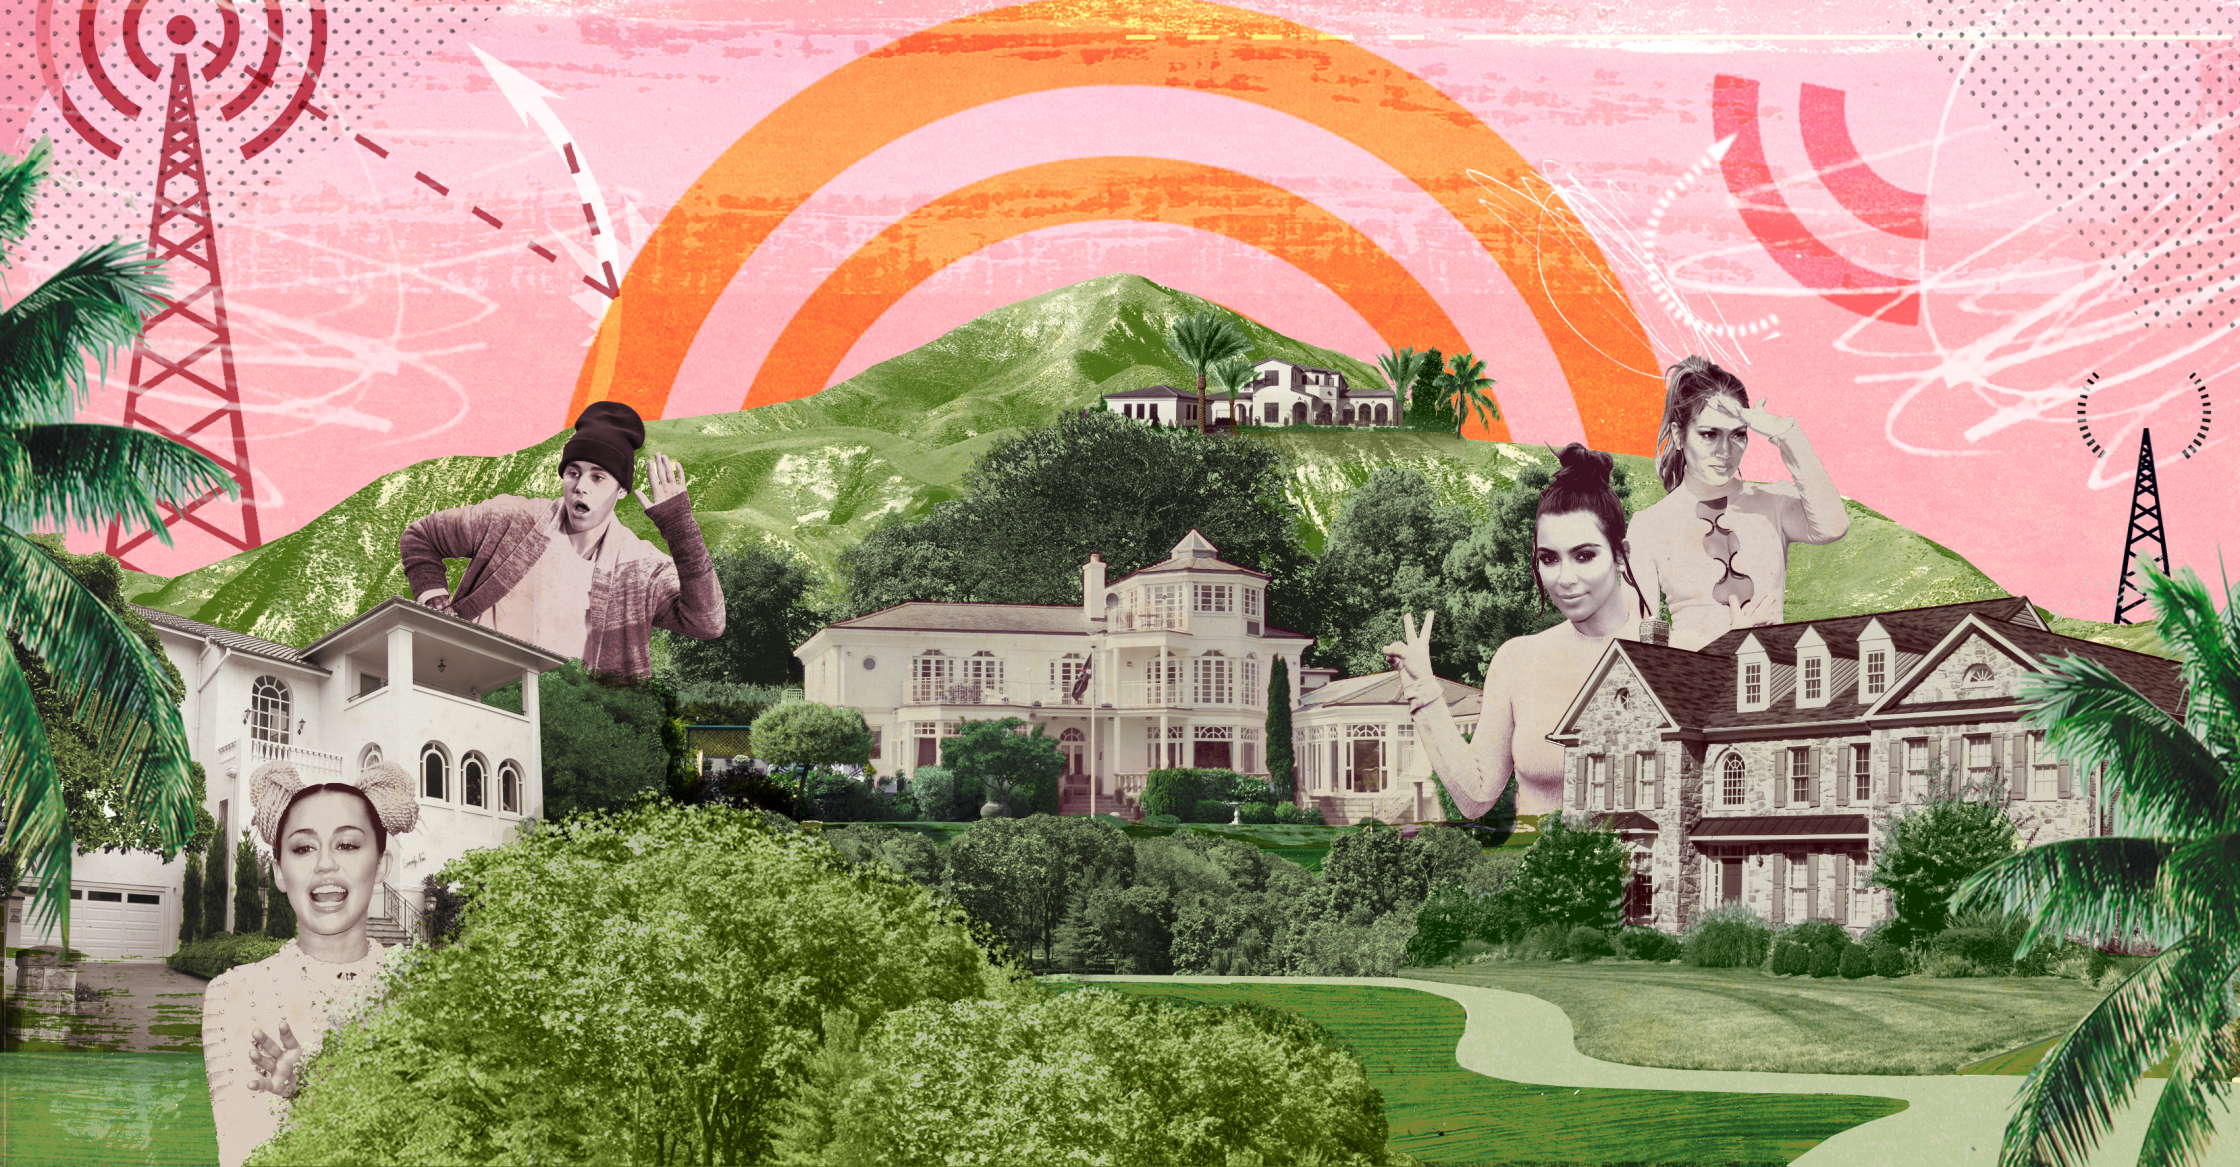 sarah-hanson-financial-times-hidden-hills-off-grid-celebrity-homes.jpg